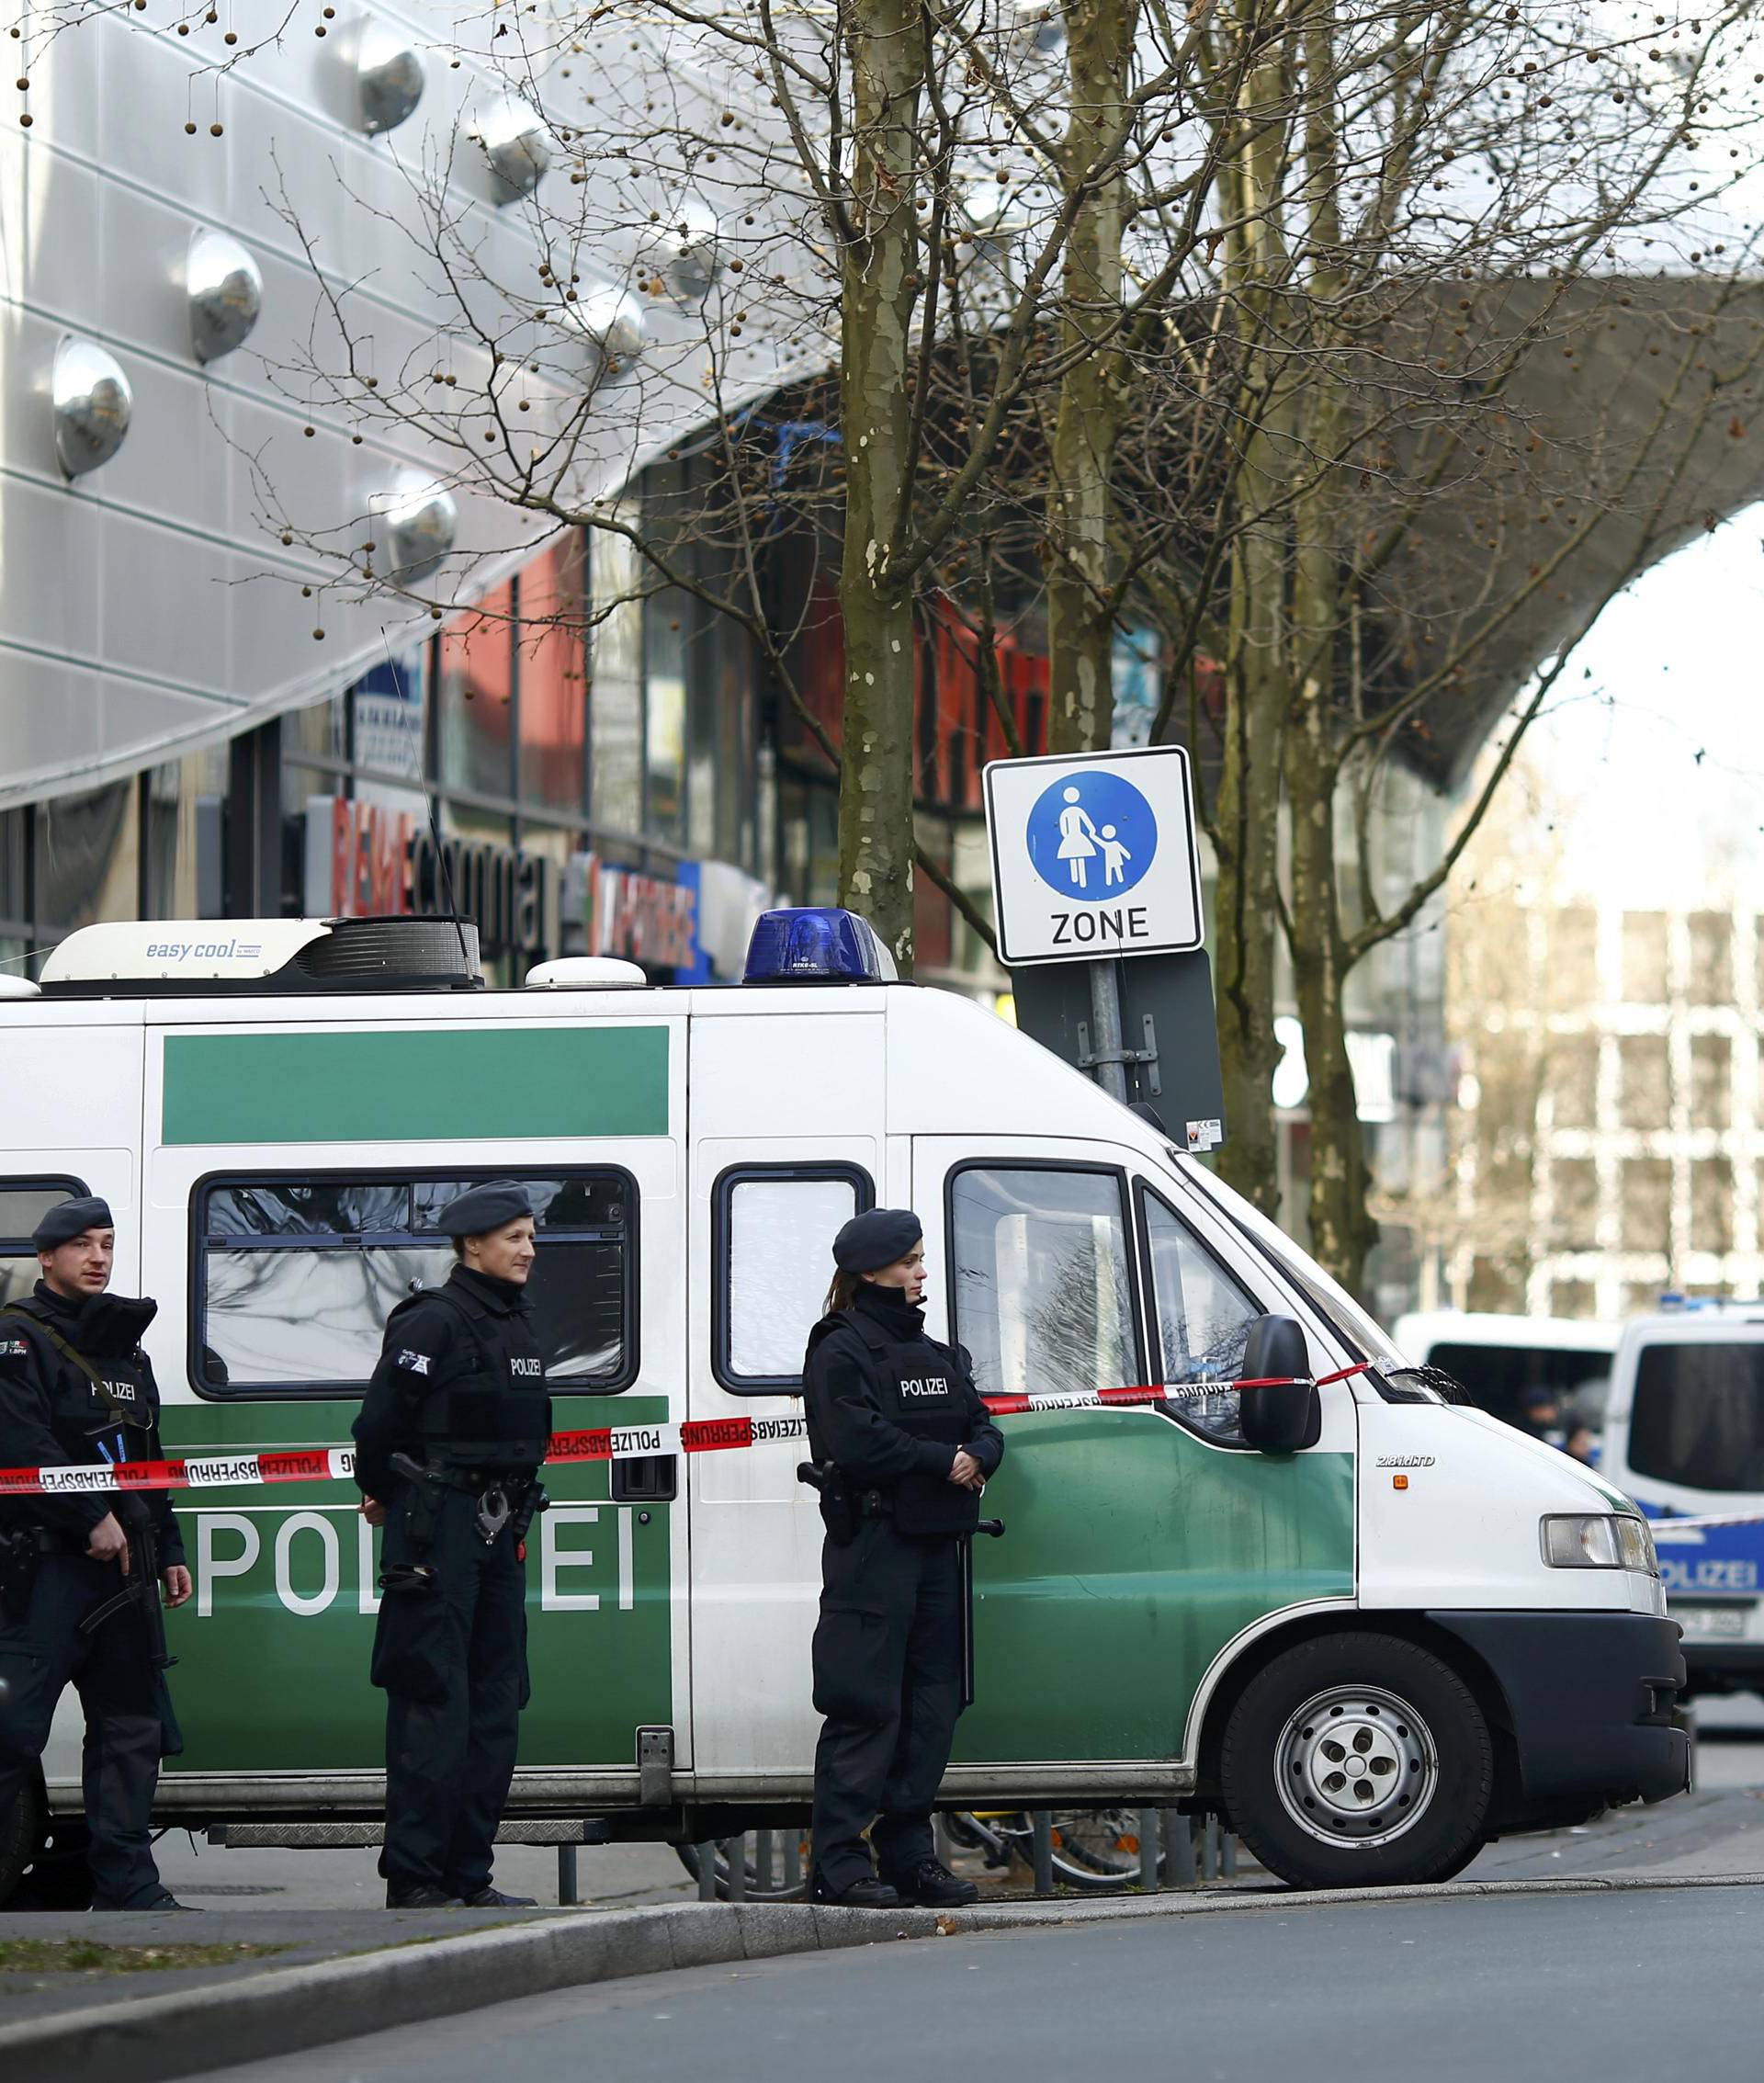 Police secures the area around Limbecker Platz shopping mall in Essen